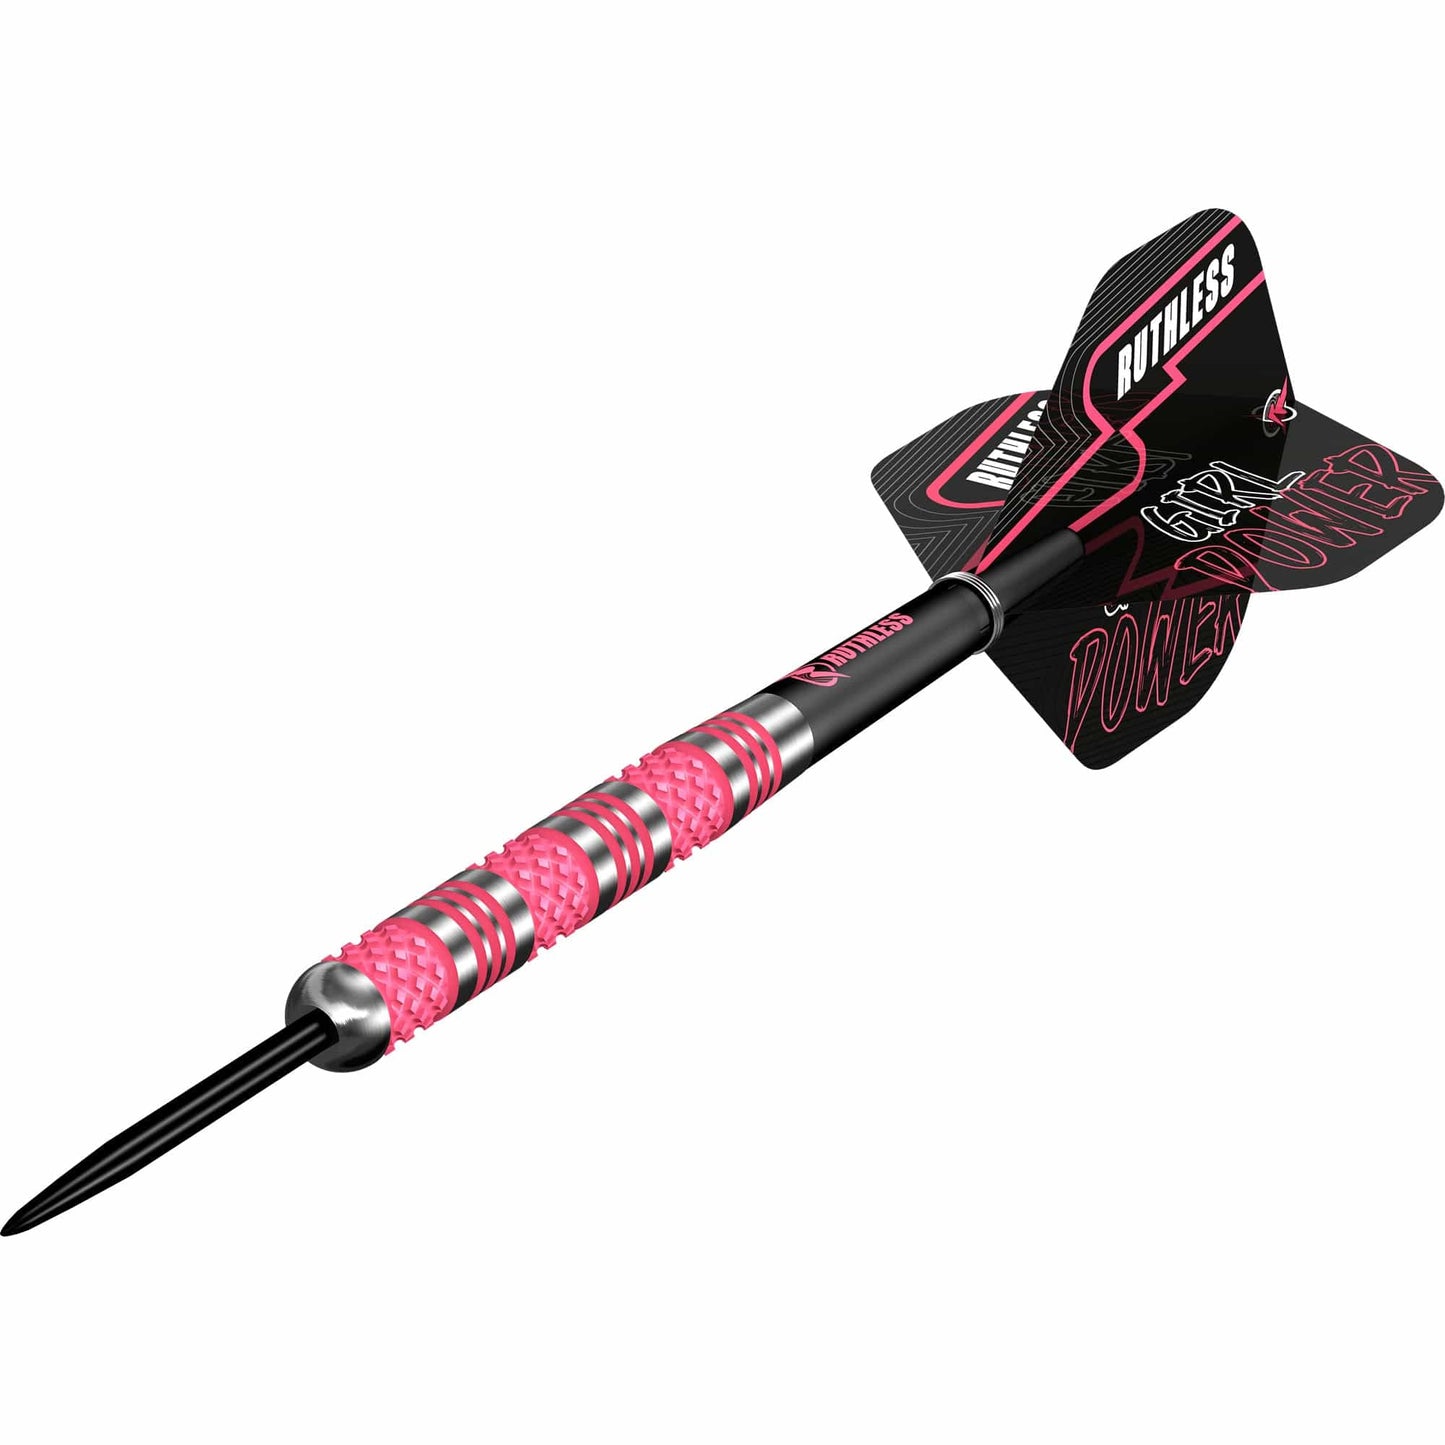 Ruthless Girl Power Darts - 90% Steel Tip Tungsten - Knurled - Pink